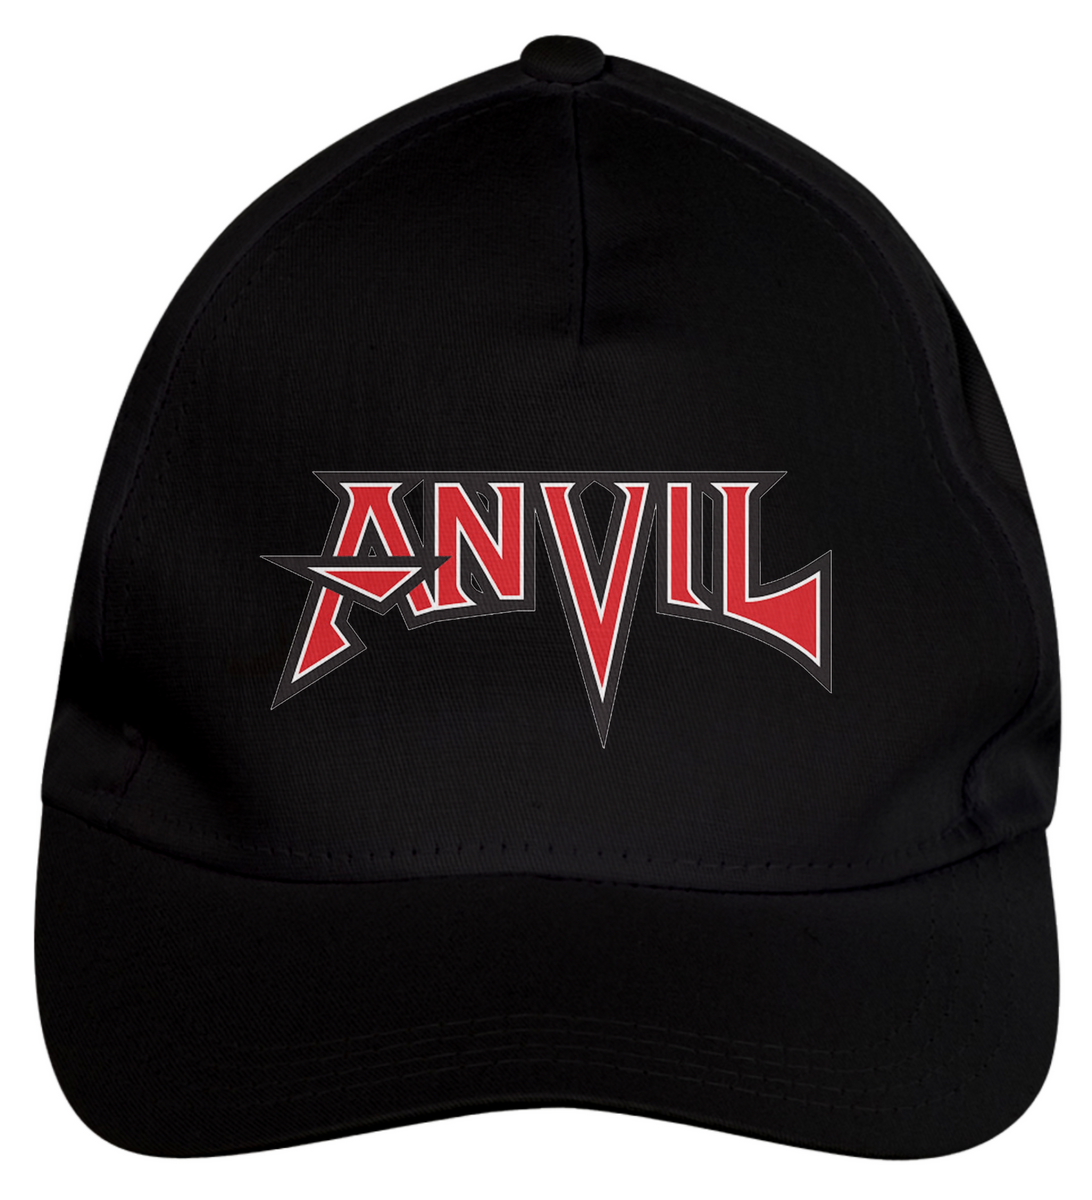 Nome do produto: Anvil